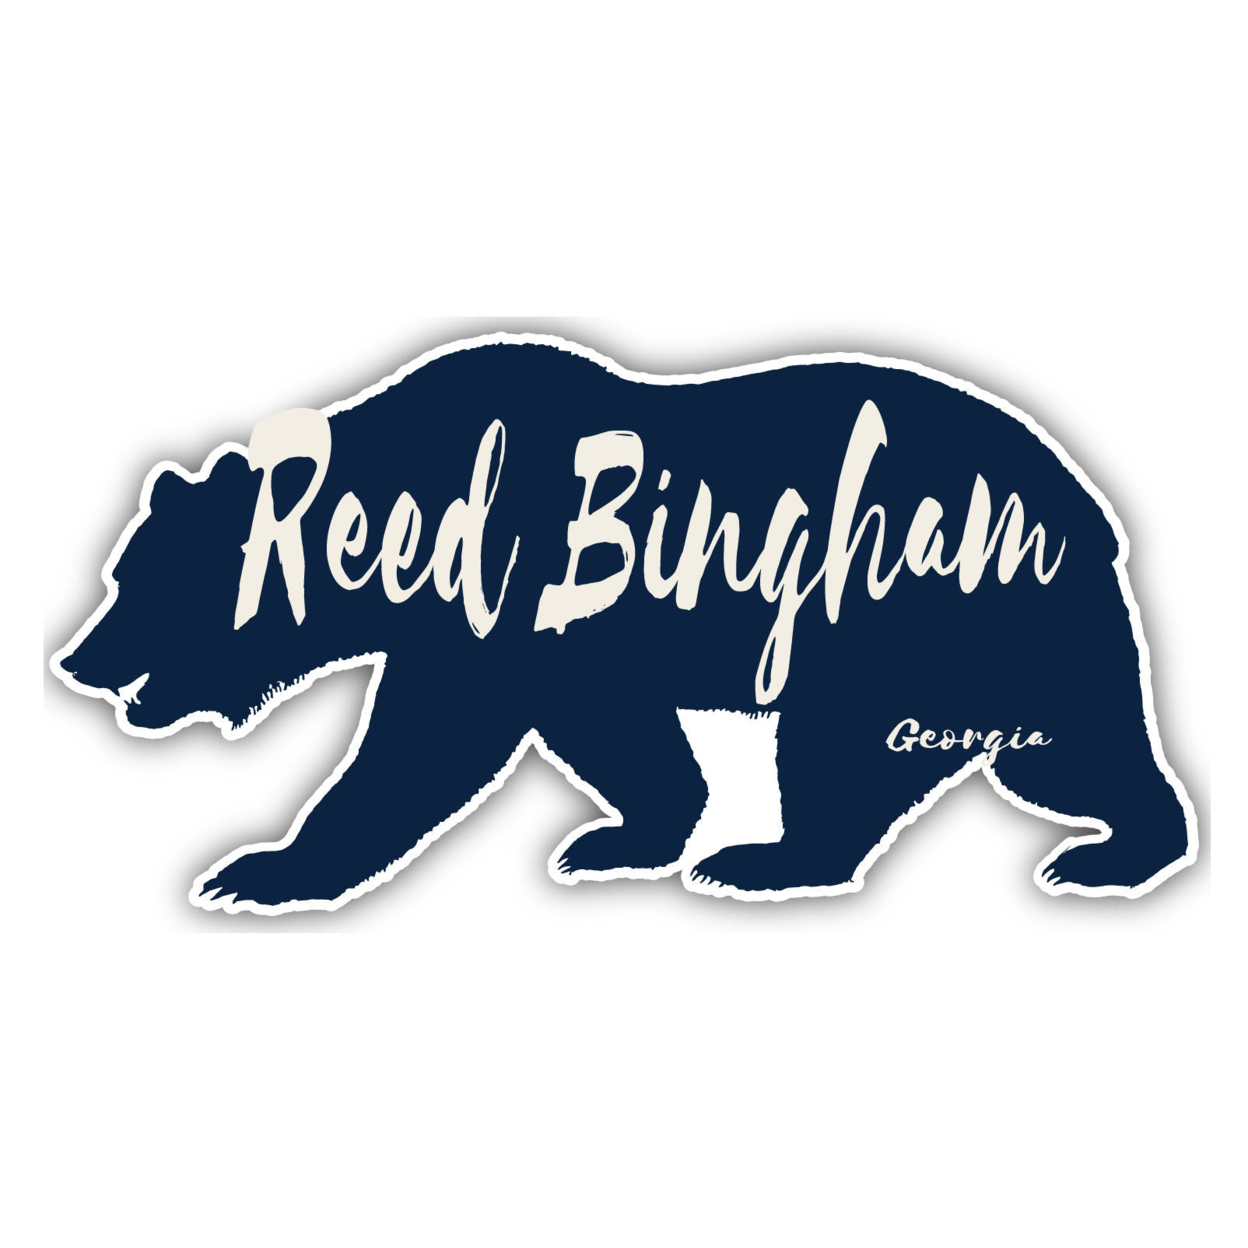 Reed Bingham Georgia Souvenir Decorative Stickers (Choose Theme And Size) - Single Unit, 2-Inch, Camp Life